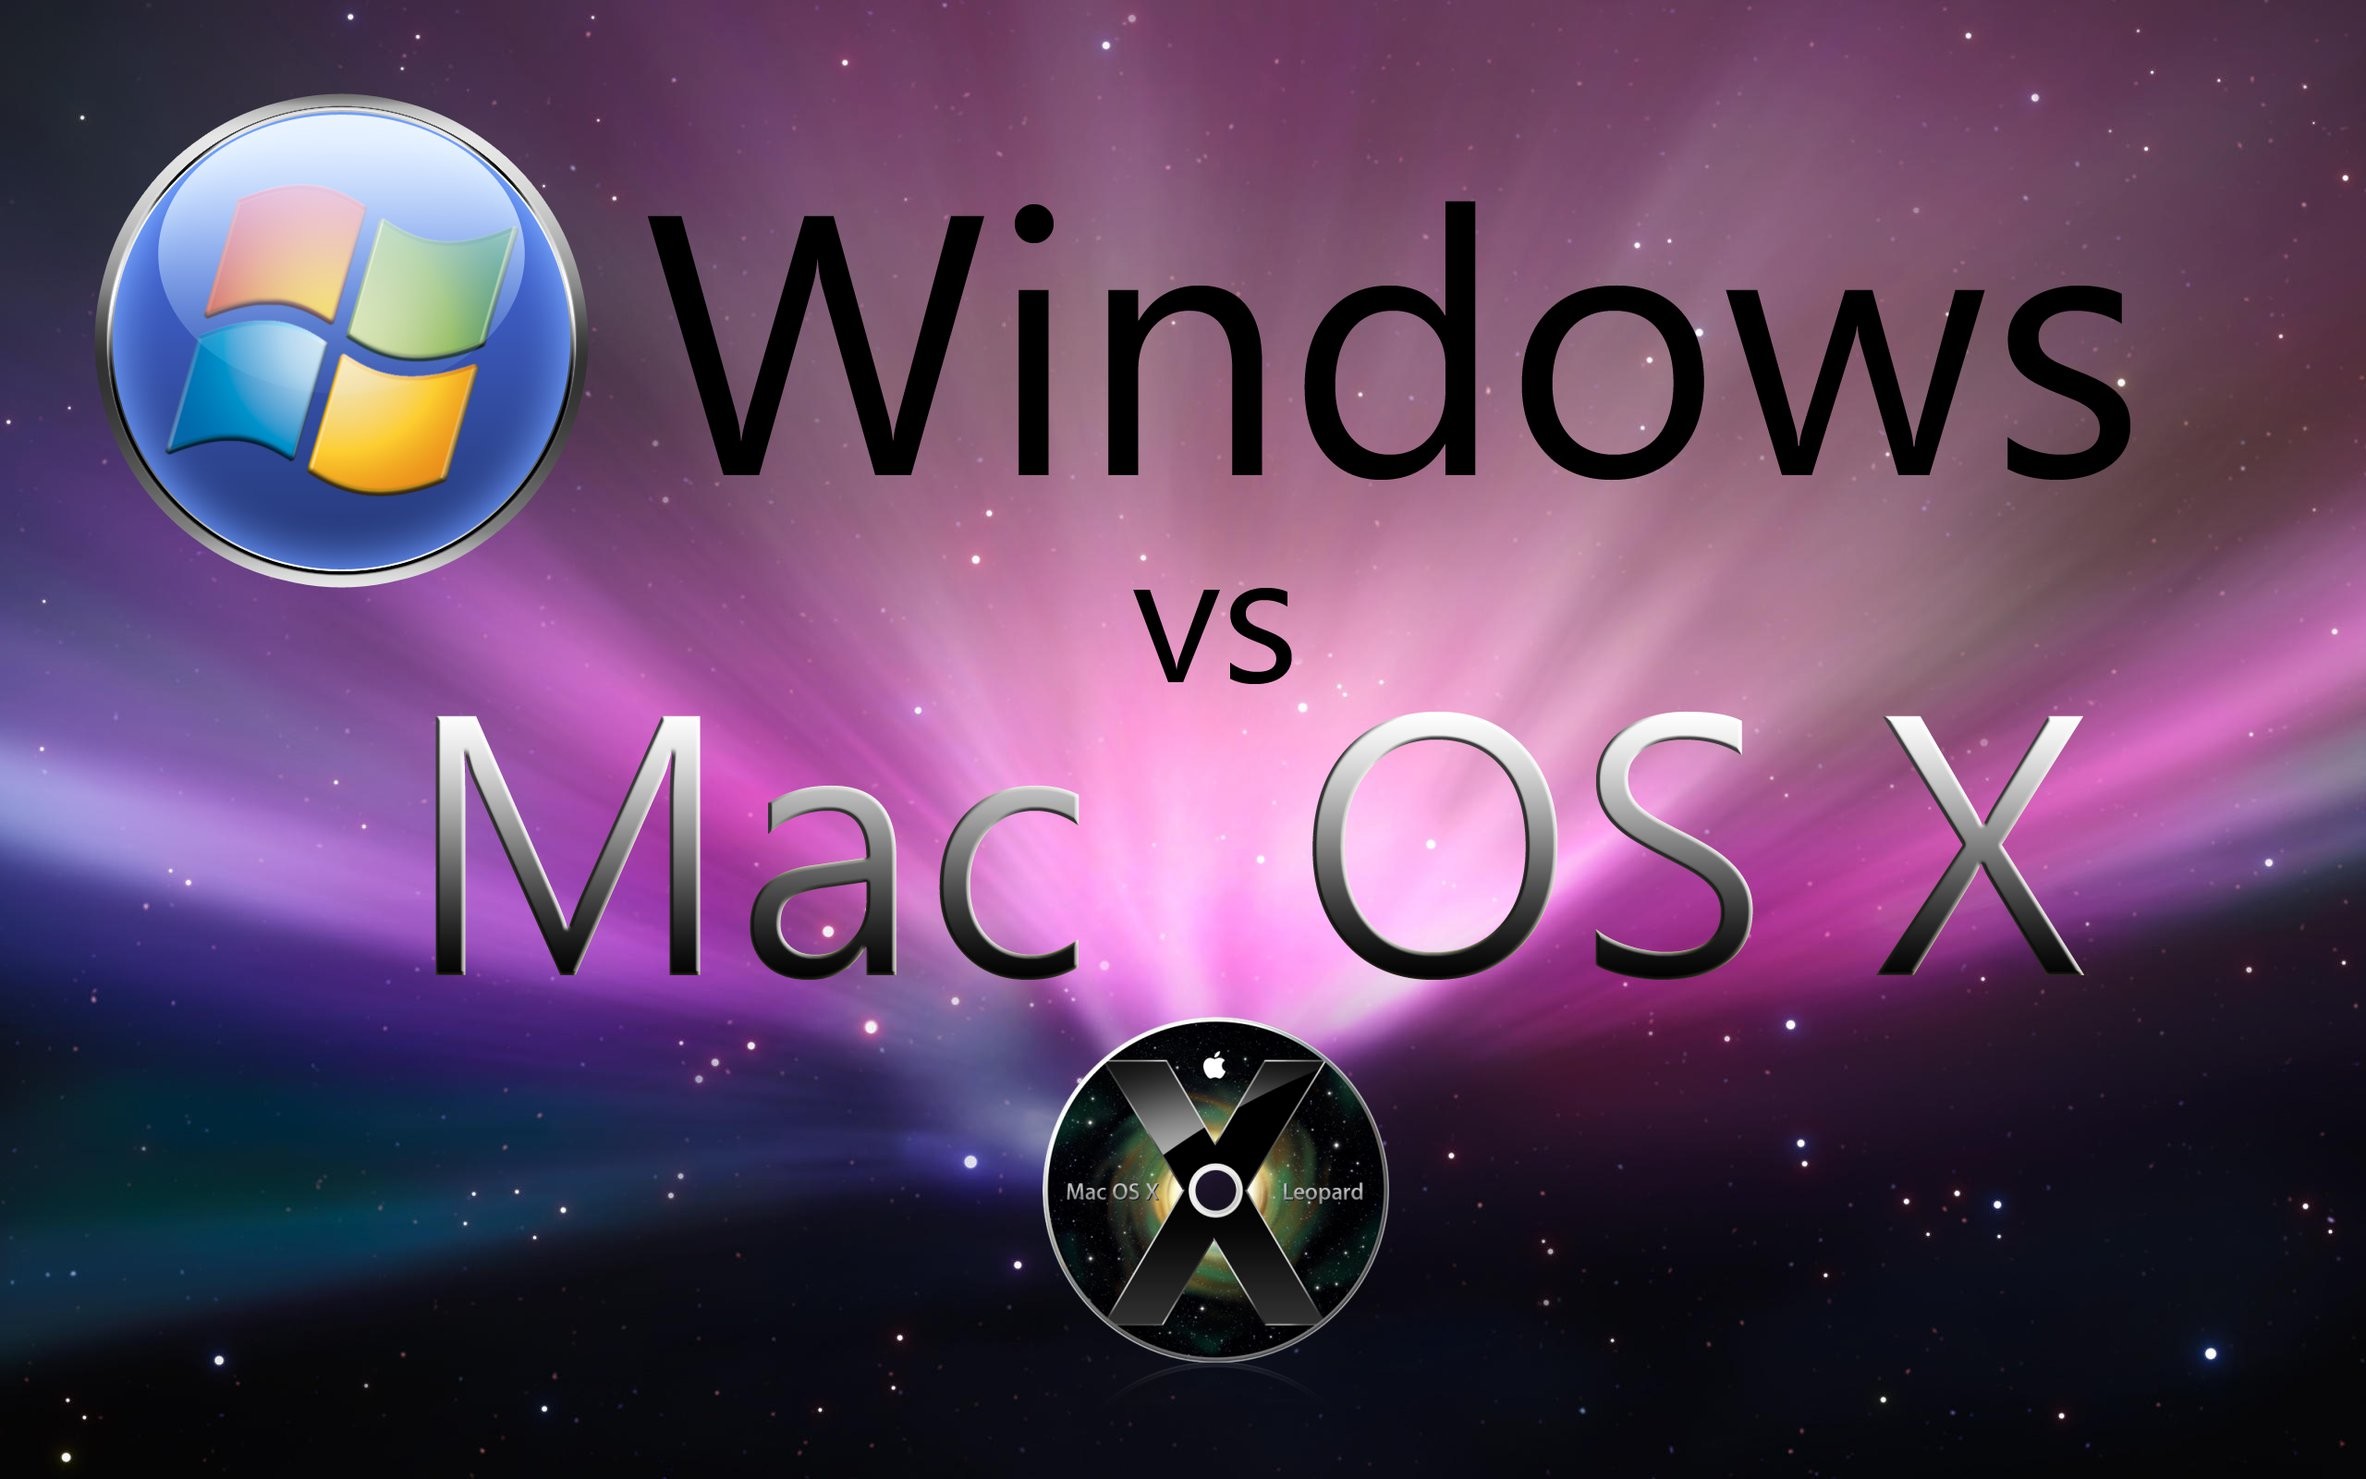 quicken for windows vs mac